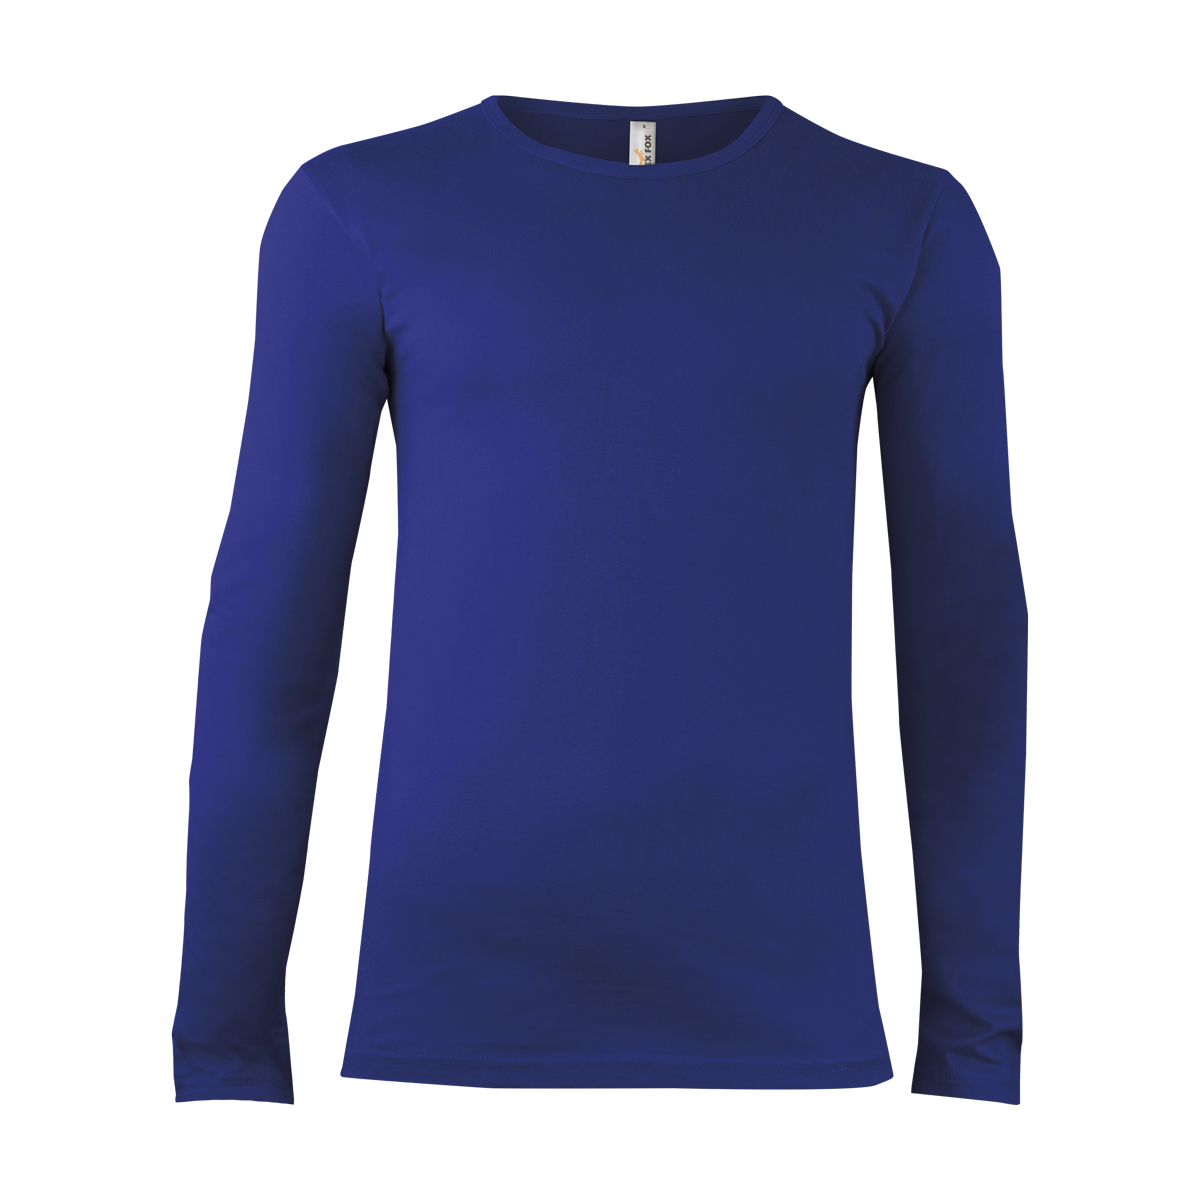 Tričko s dlouhým rukávem Alex Fox Long 150 - modré, L